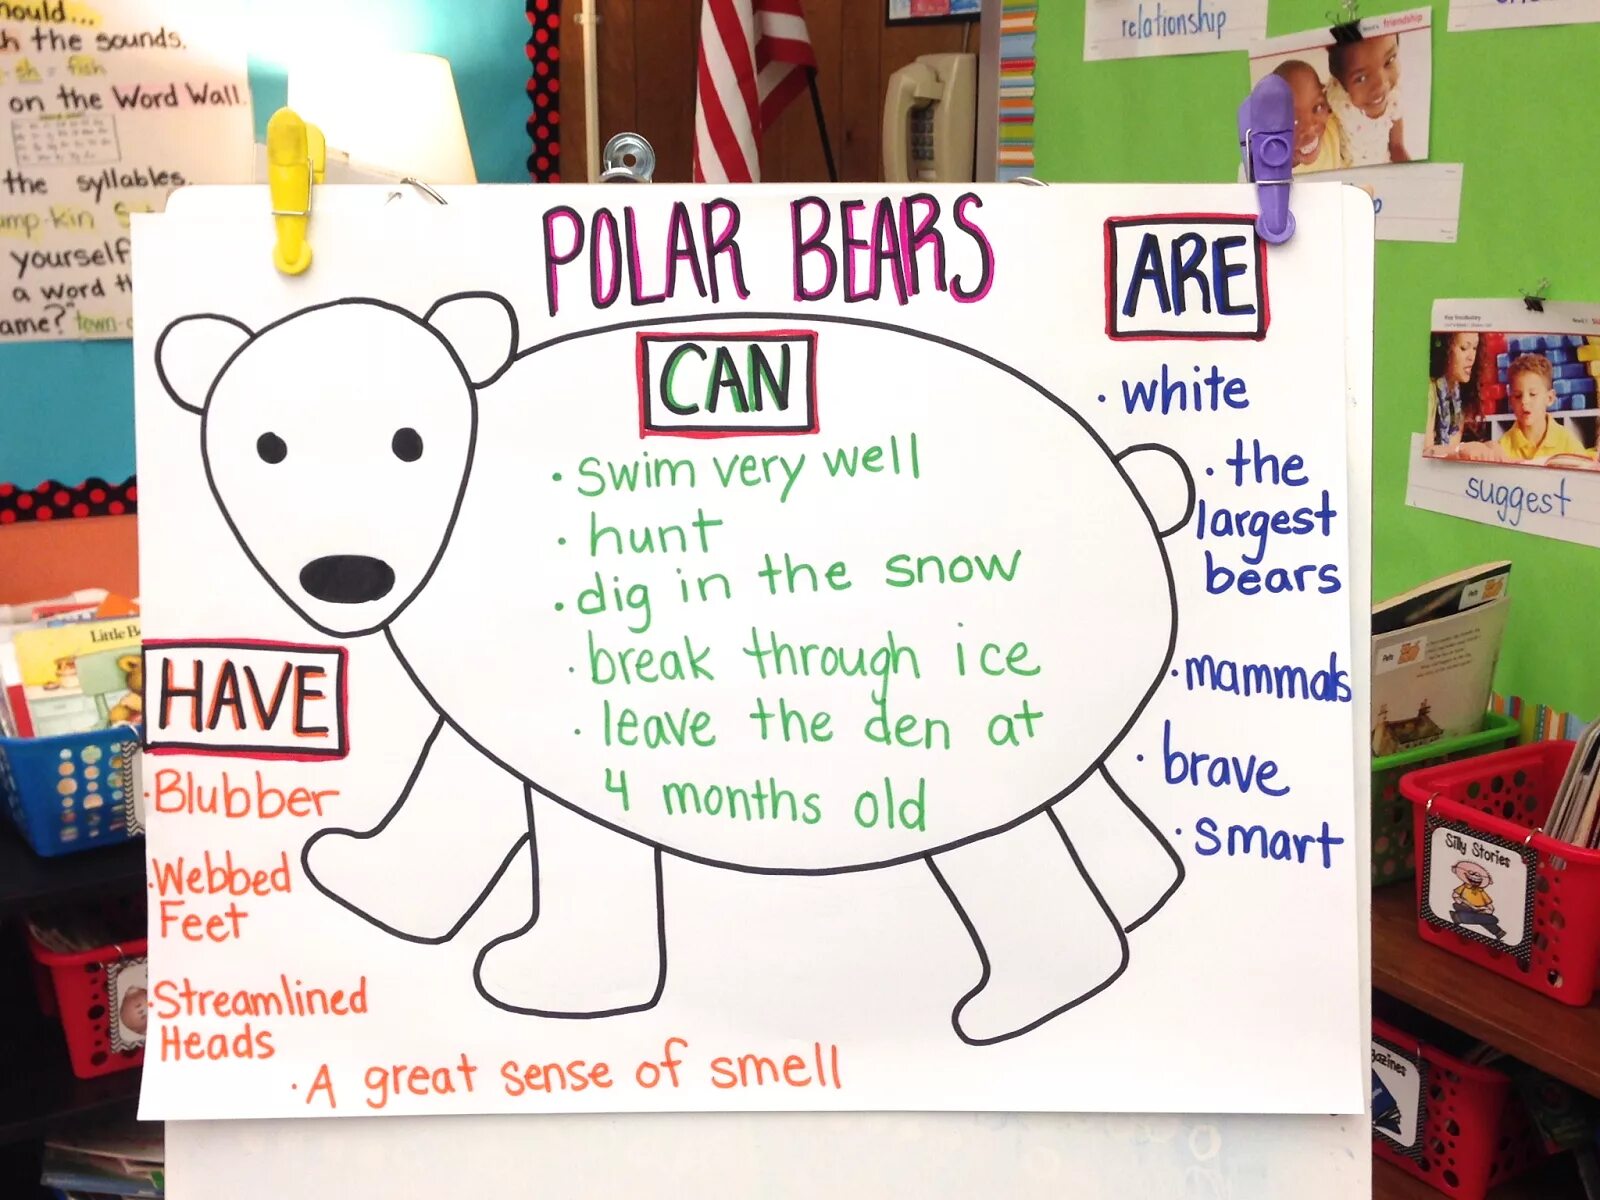 He swims very well. Polar Bear information for Kids. Bear information.